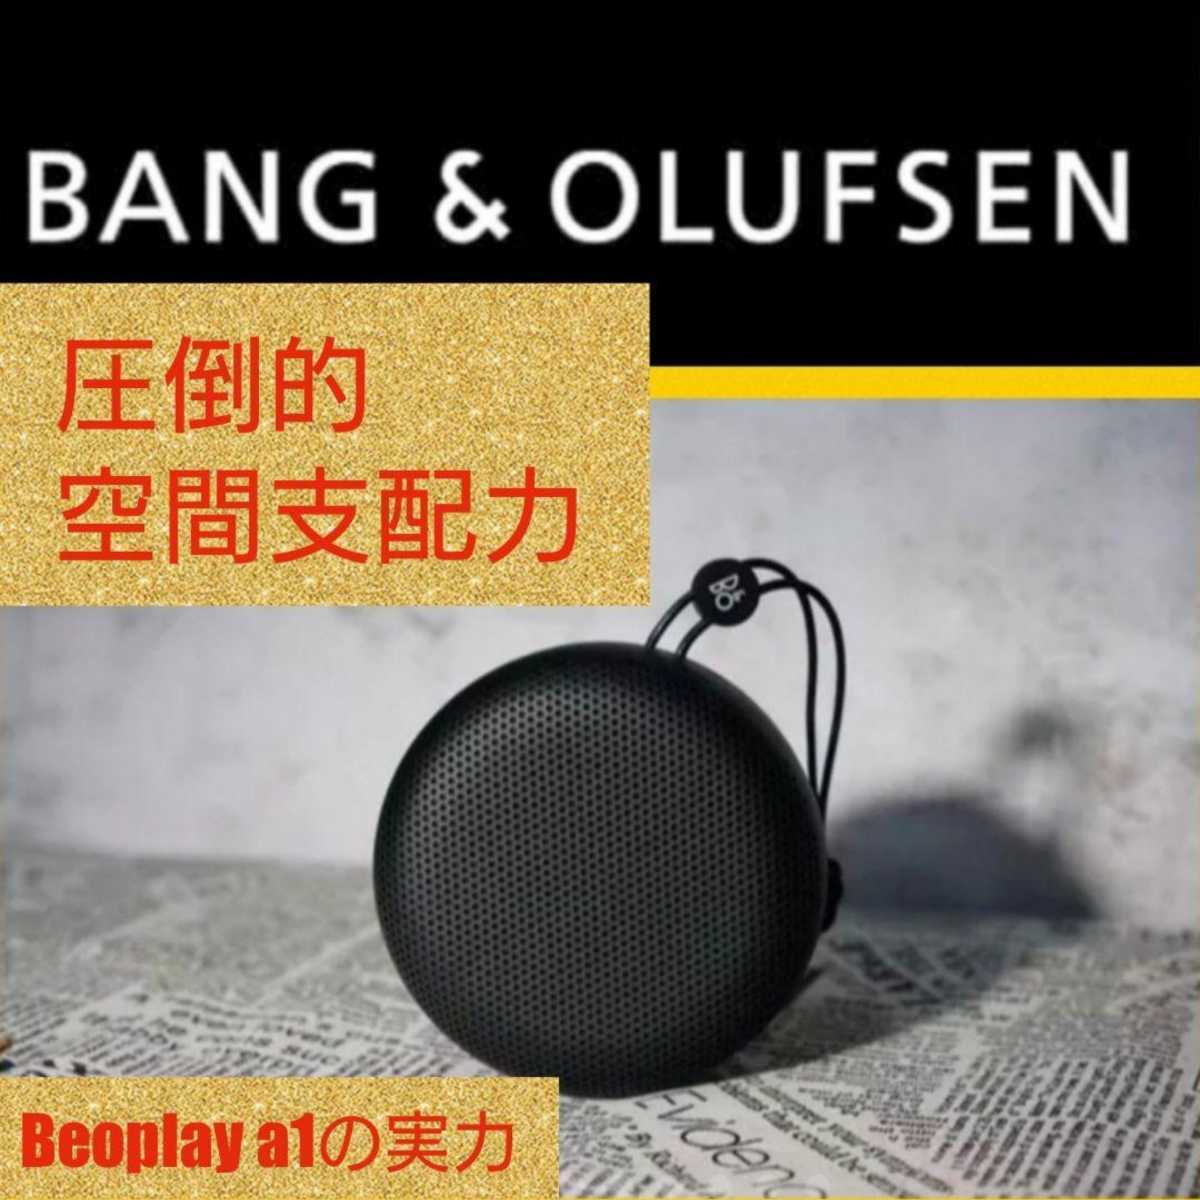 Bang & Olufsen BeoPlay A1 新品未使用未開封 送料無料 lp2m.ustjogja